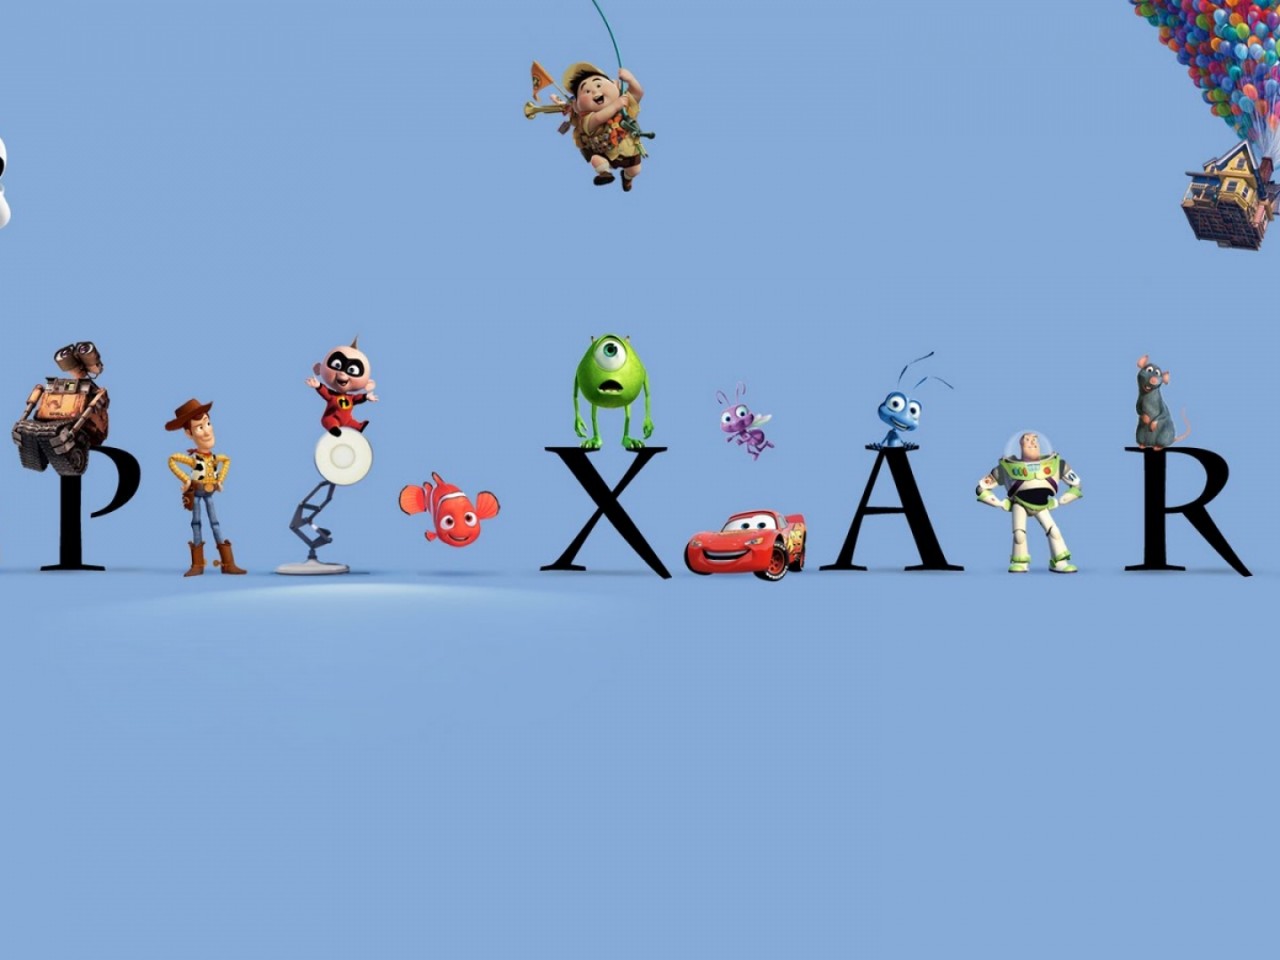 Hd Wallpapers Disney Pixar Inside Out Movie 2880 X 1800 1484 Kb Jpeg